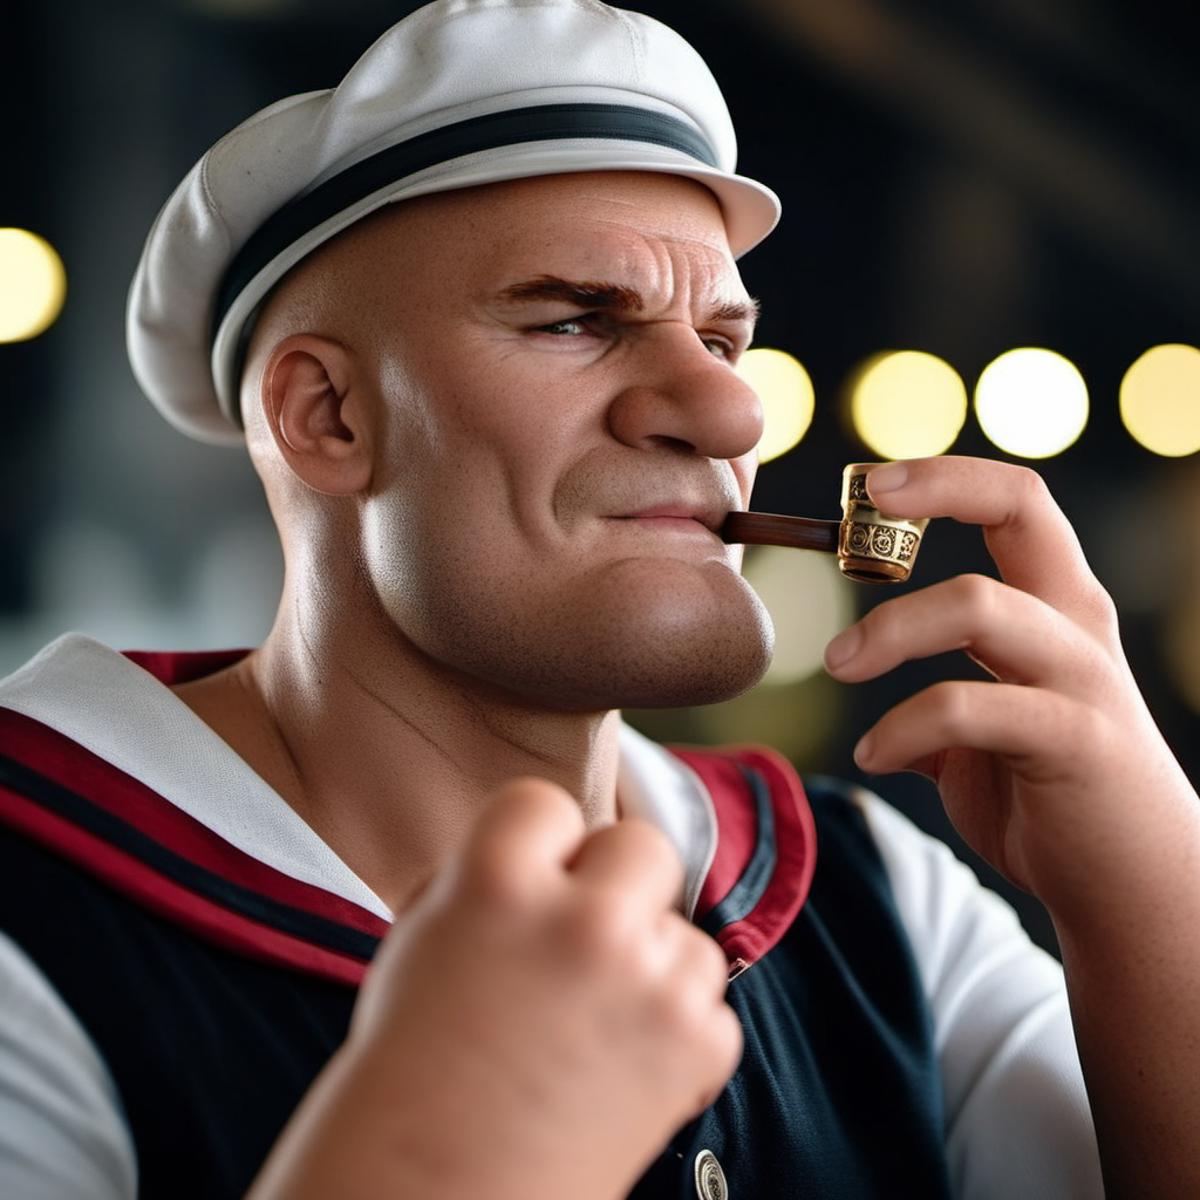 Popeye the Sailor Man - SDXL image by PhotobAIt